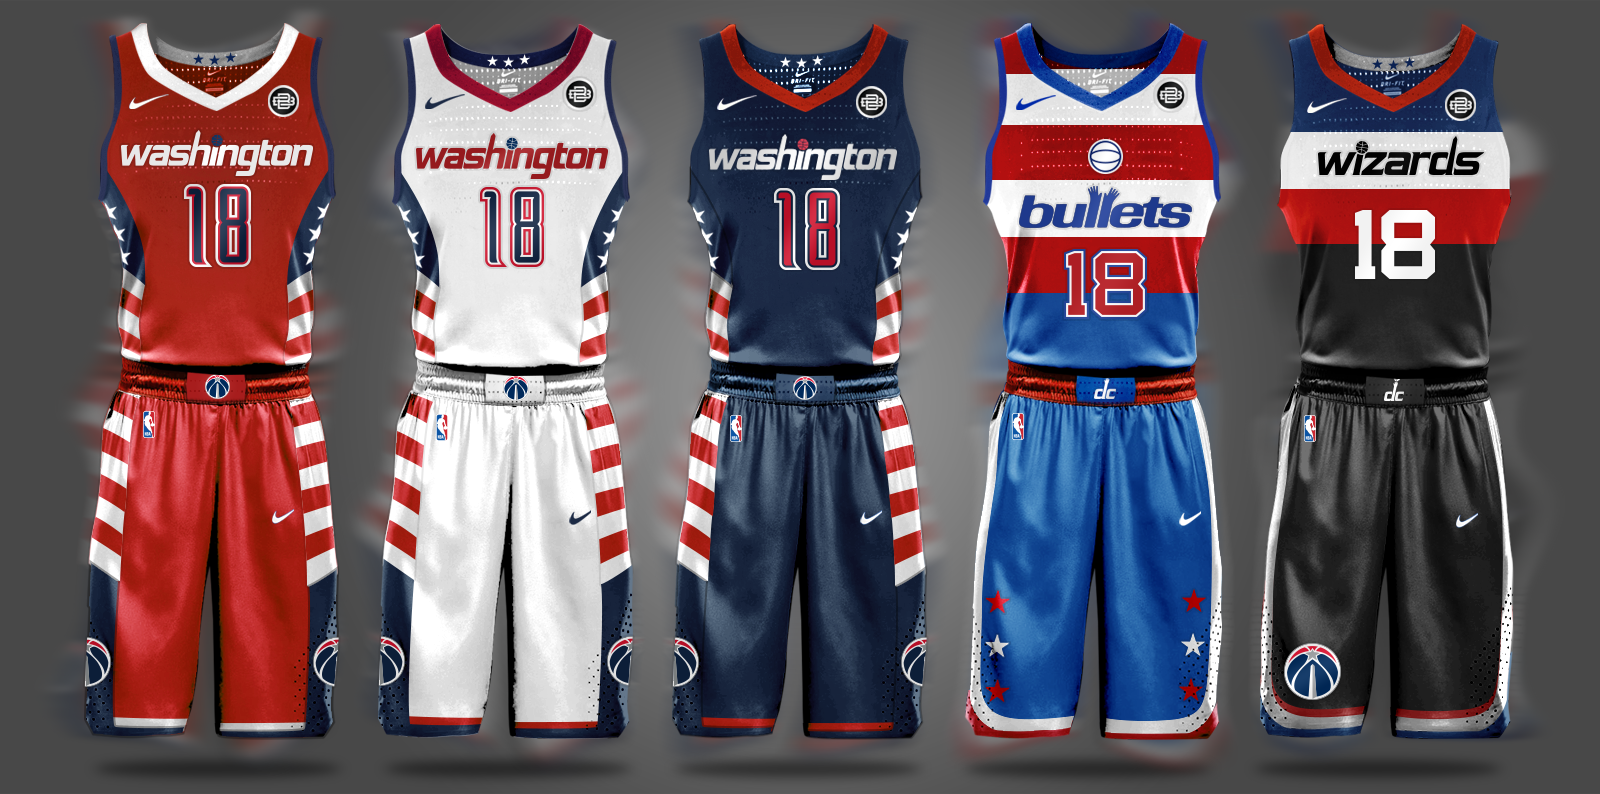 Washington Wizards Alternate Uniform  Basketball uniforms design,  Basketball uniforms, Washington wizards